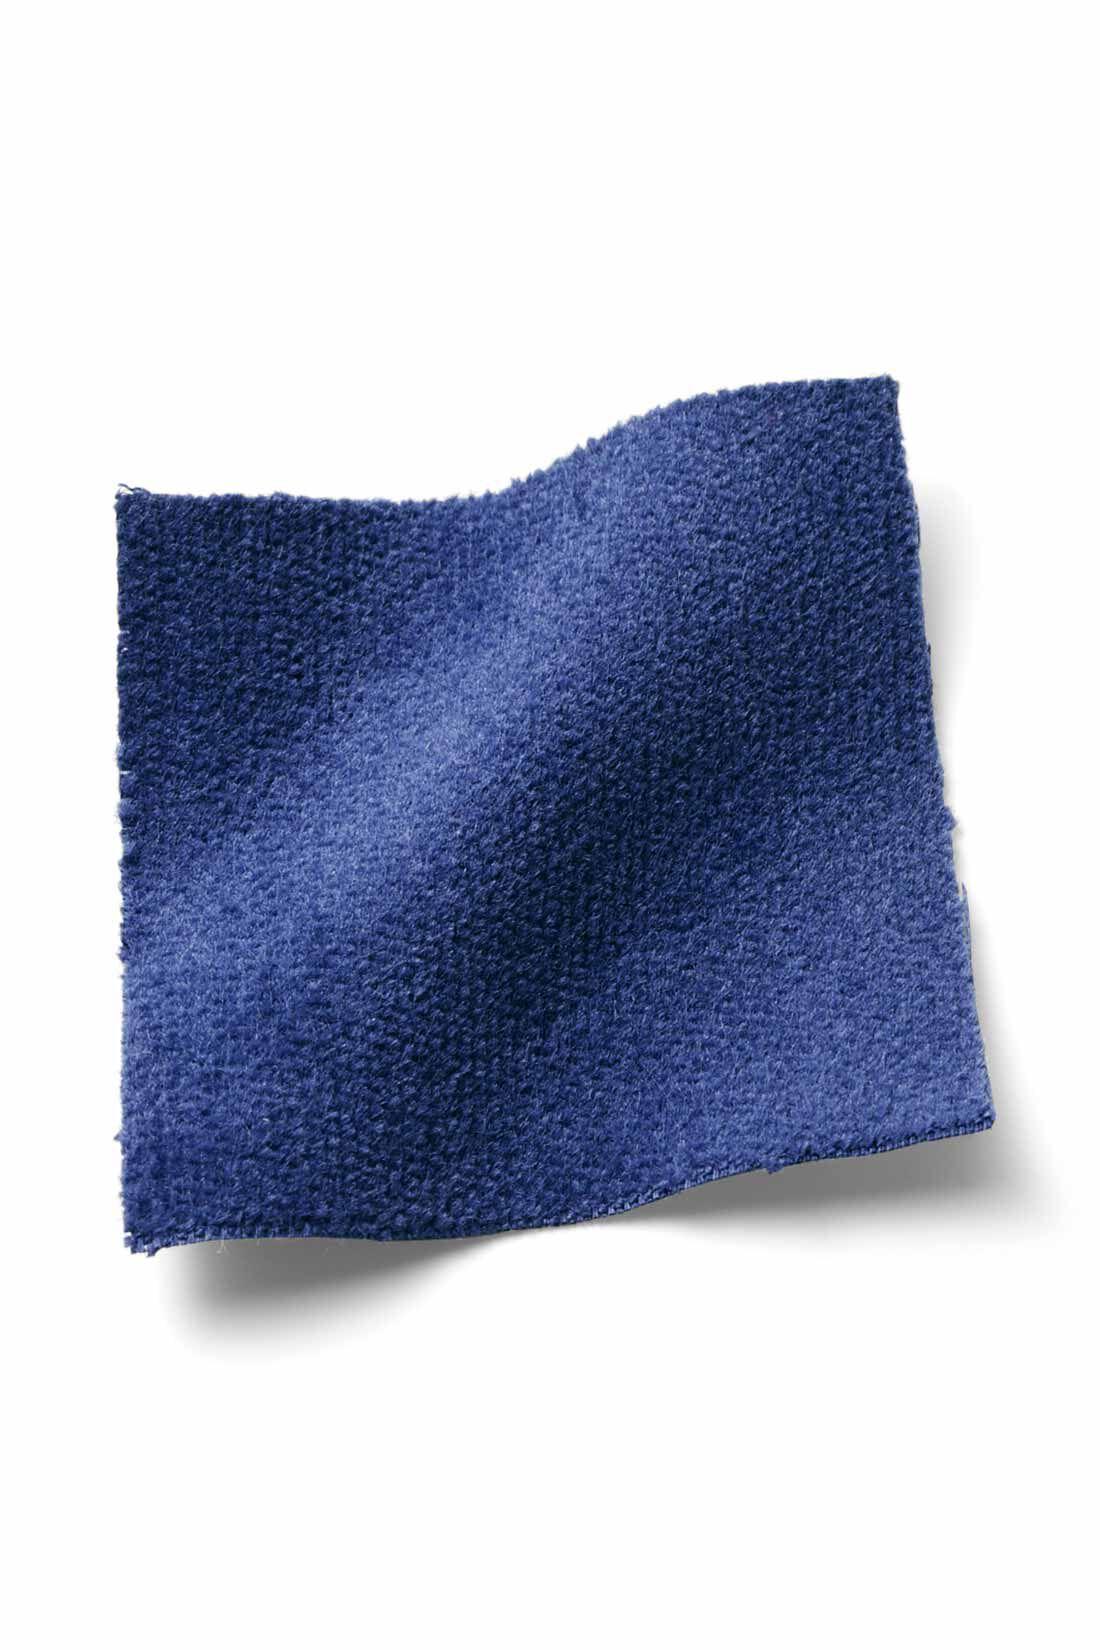 Live in  comfort|リブ イン コンフォート　キレイ見えをお約束 ぐい伸び別珍素材ジャンパースカート〈ブルー〉|イージーケアなのに高級感のある別珍素材。すべりのよい裏地付き。